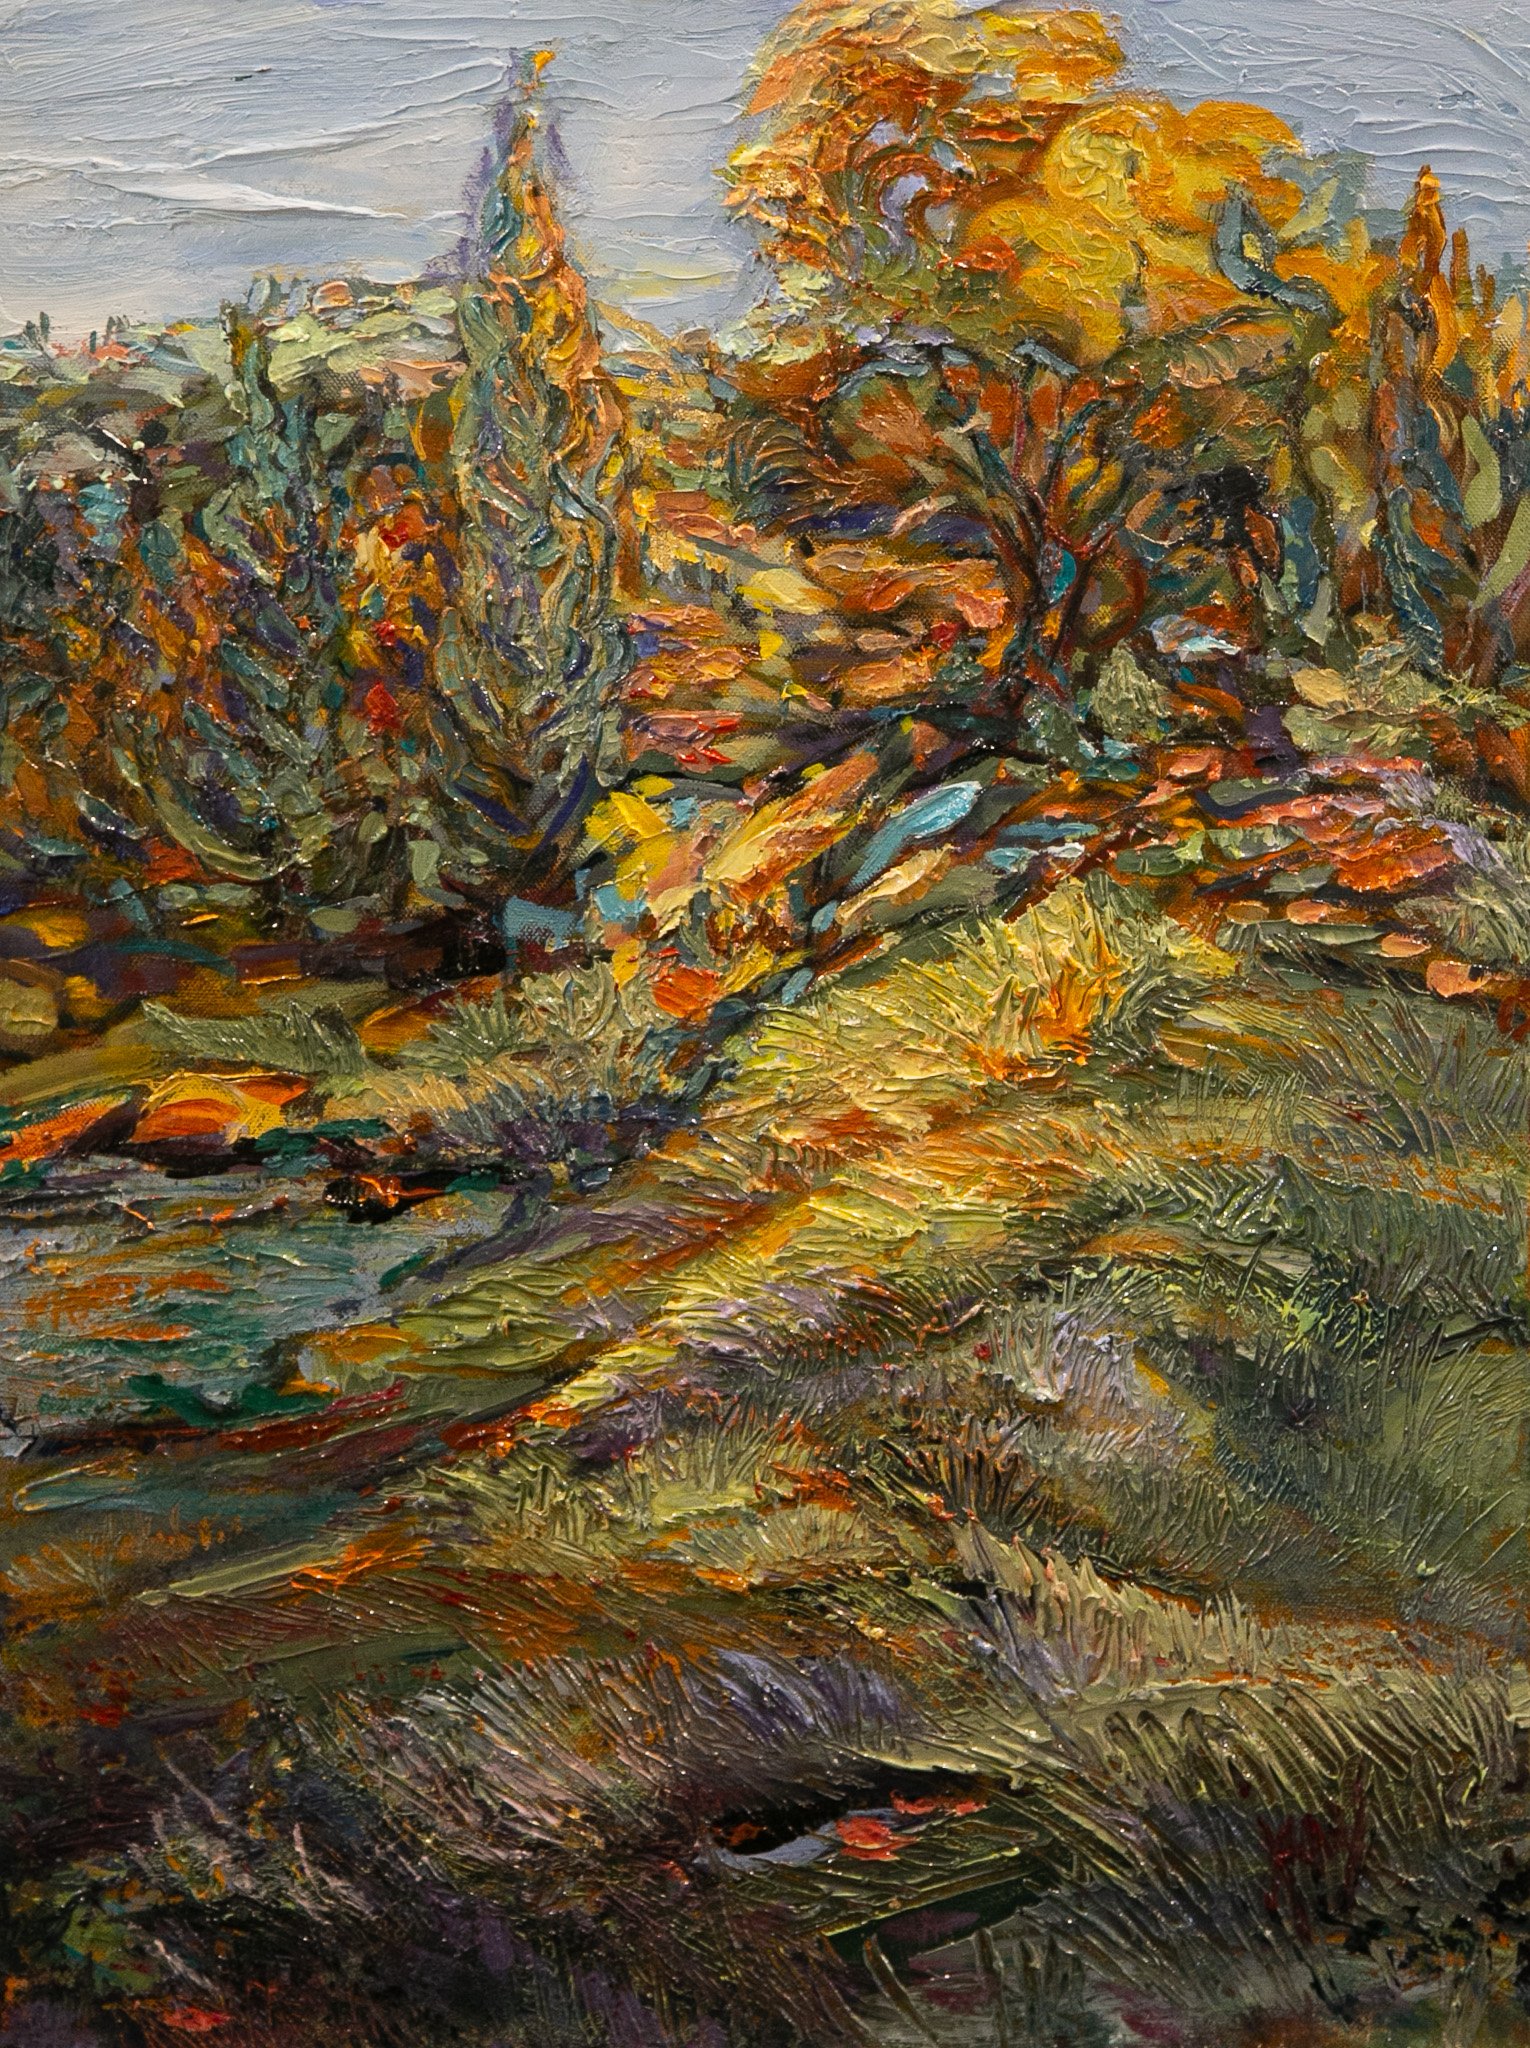   SOLD    Green Grassy Hillside   Oil on canvas  24” x 18”   